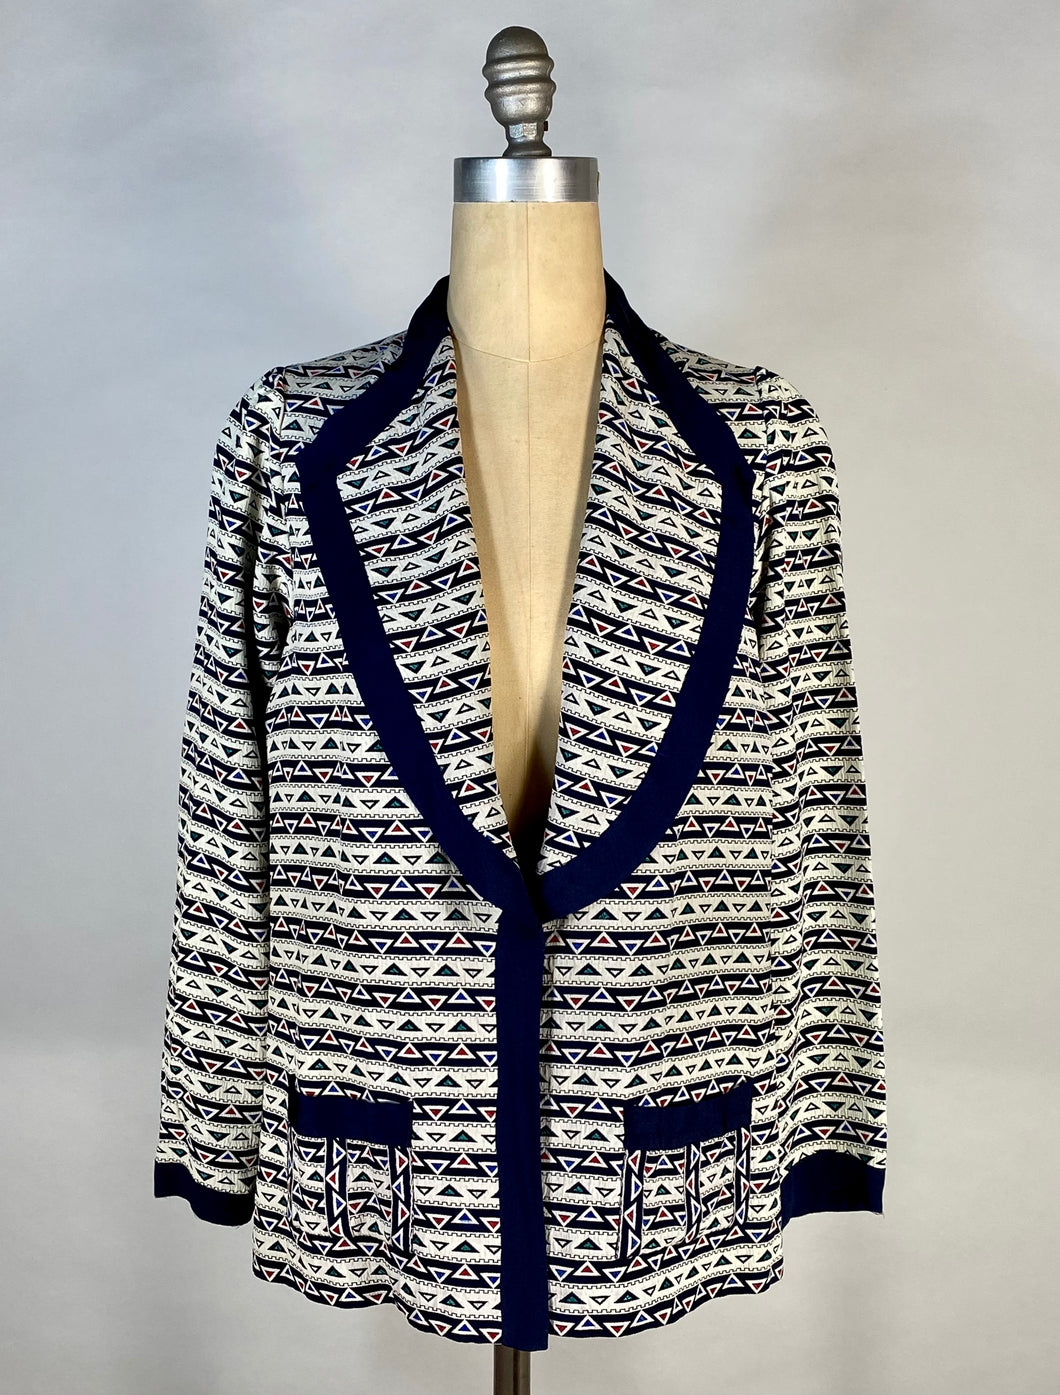 1920's ART DECO geometric triangle print lightweight silk jacket size S/M